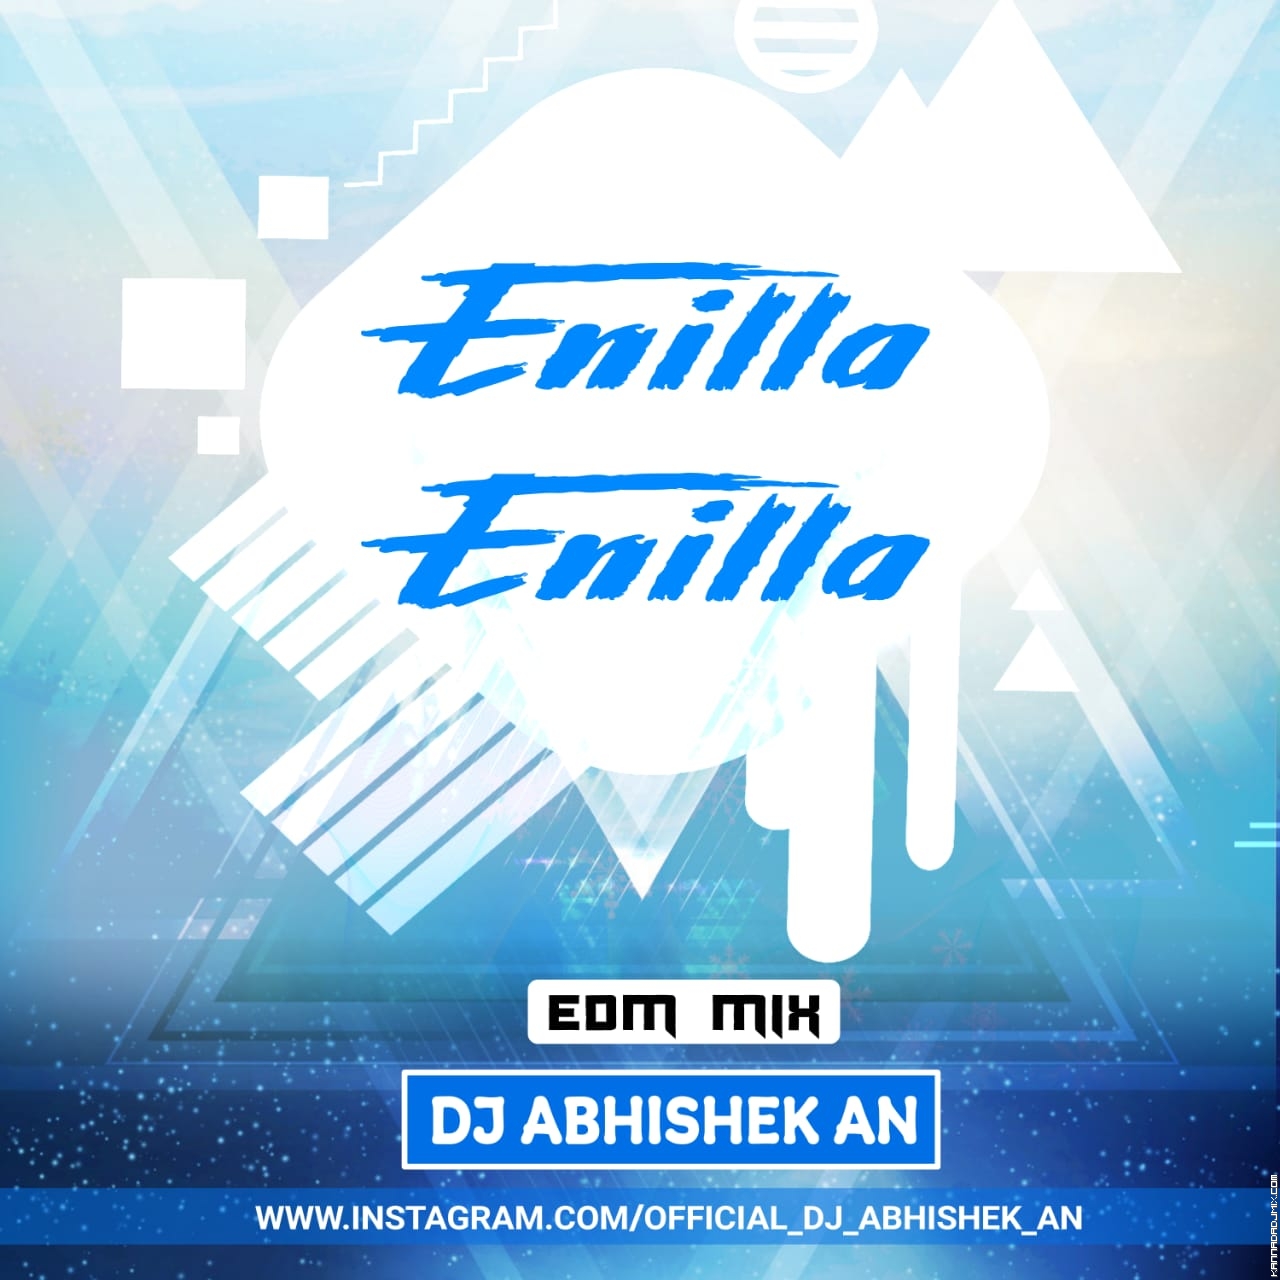 ENILLA ENILLA (EDM) DJ ABHISHEK AN.mp3